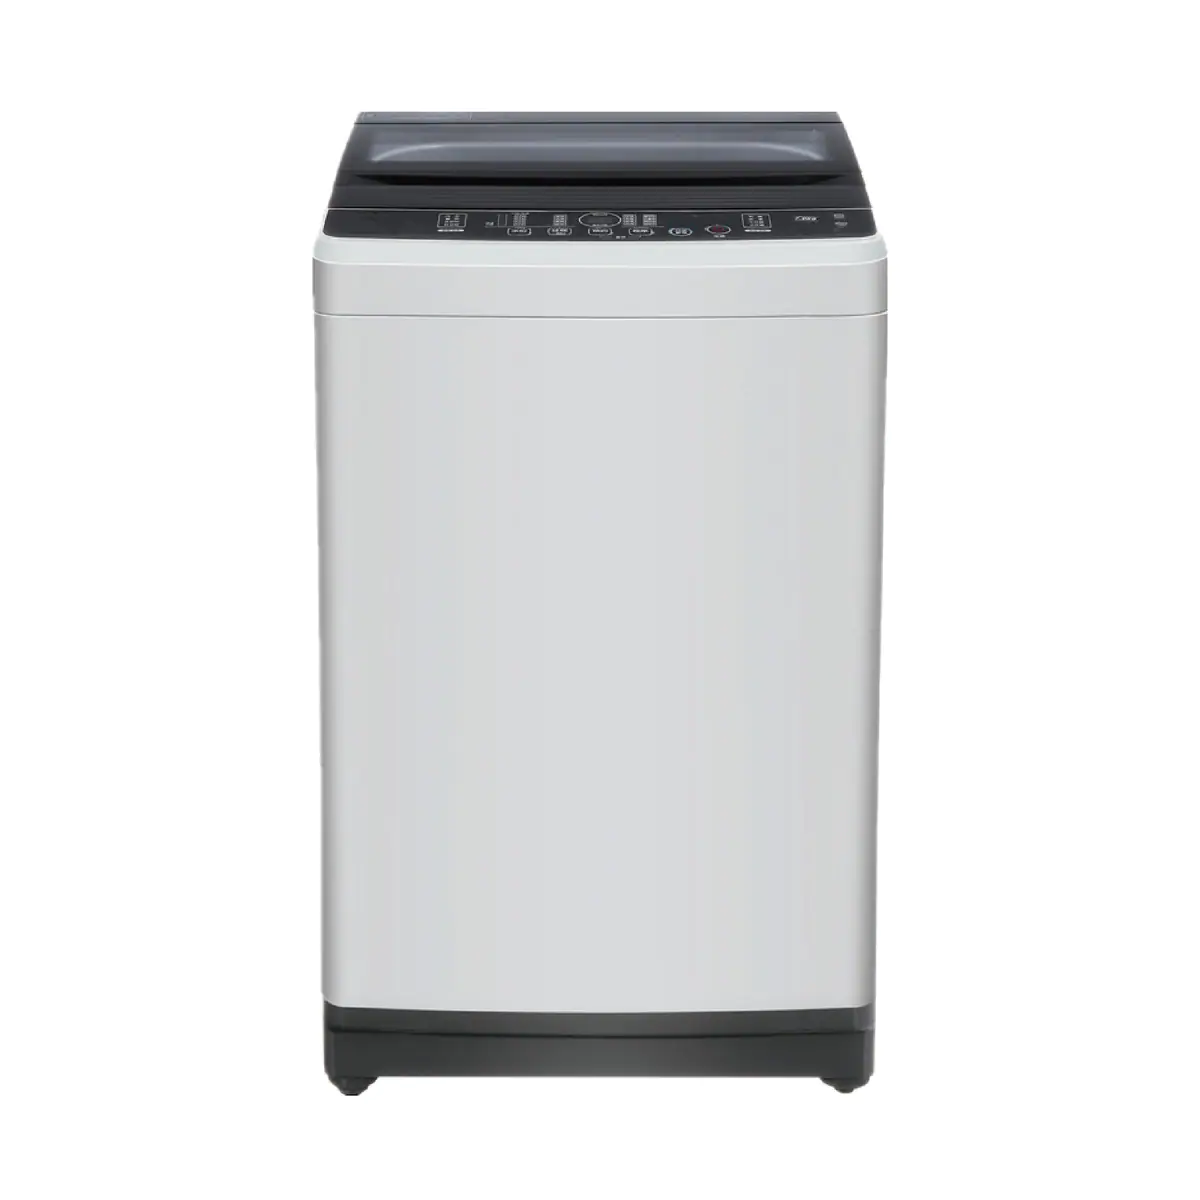 KANEDA [商/i]7KG上置式洗衣機 KT-072P 高水位